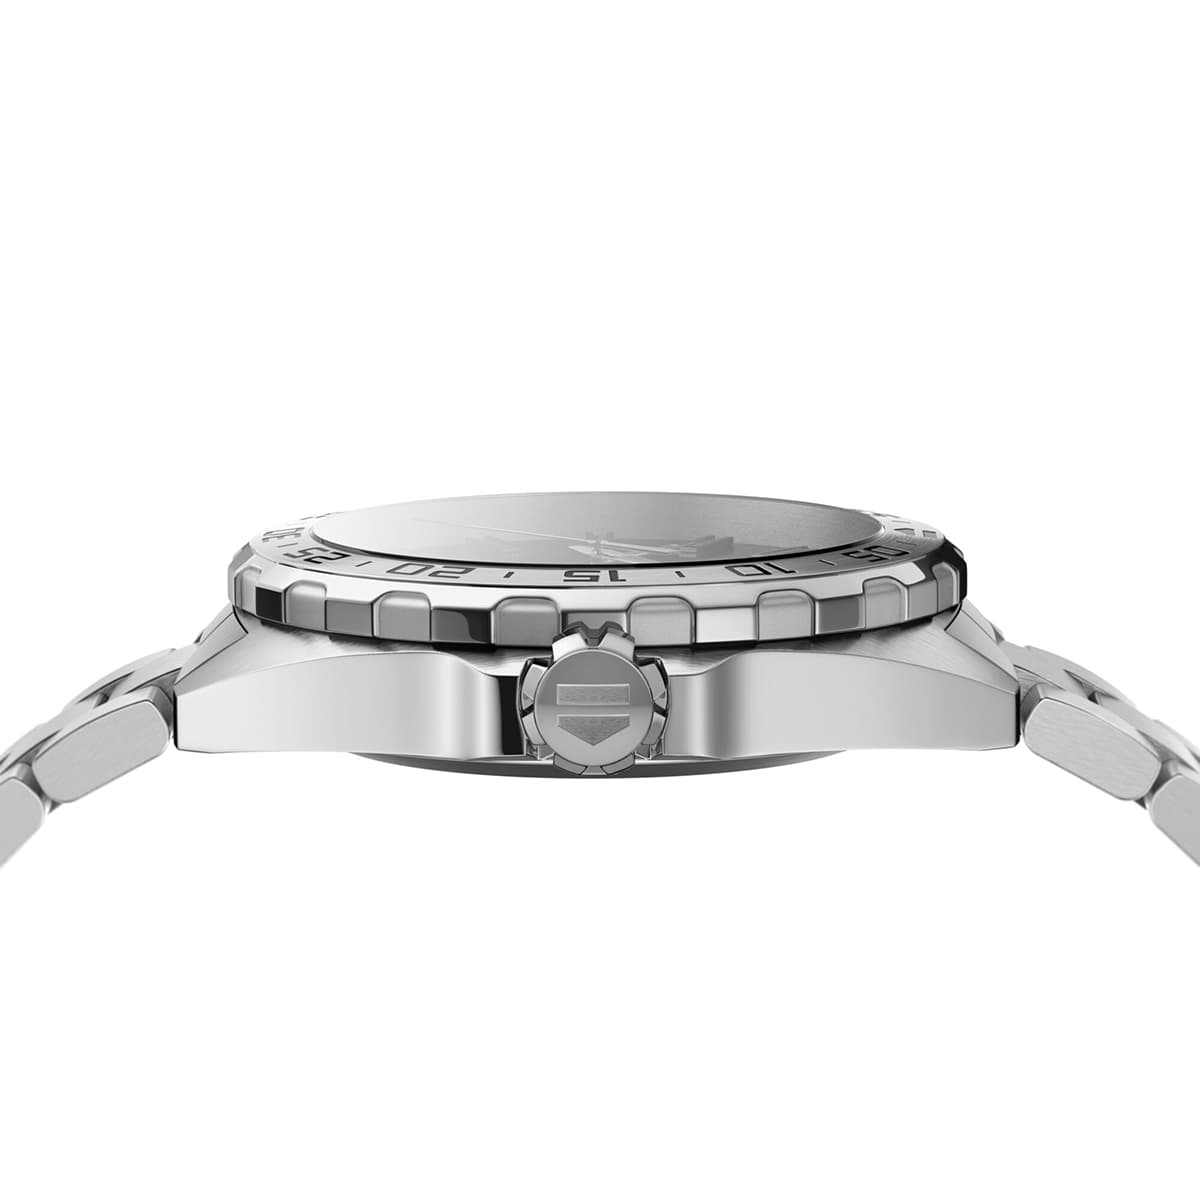 Formula 1 Stainless Steel Quartz 41mm Watch